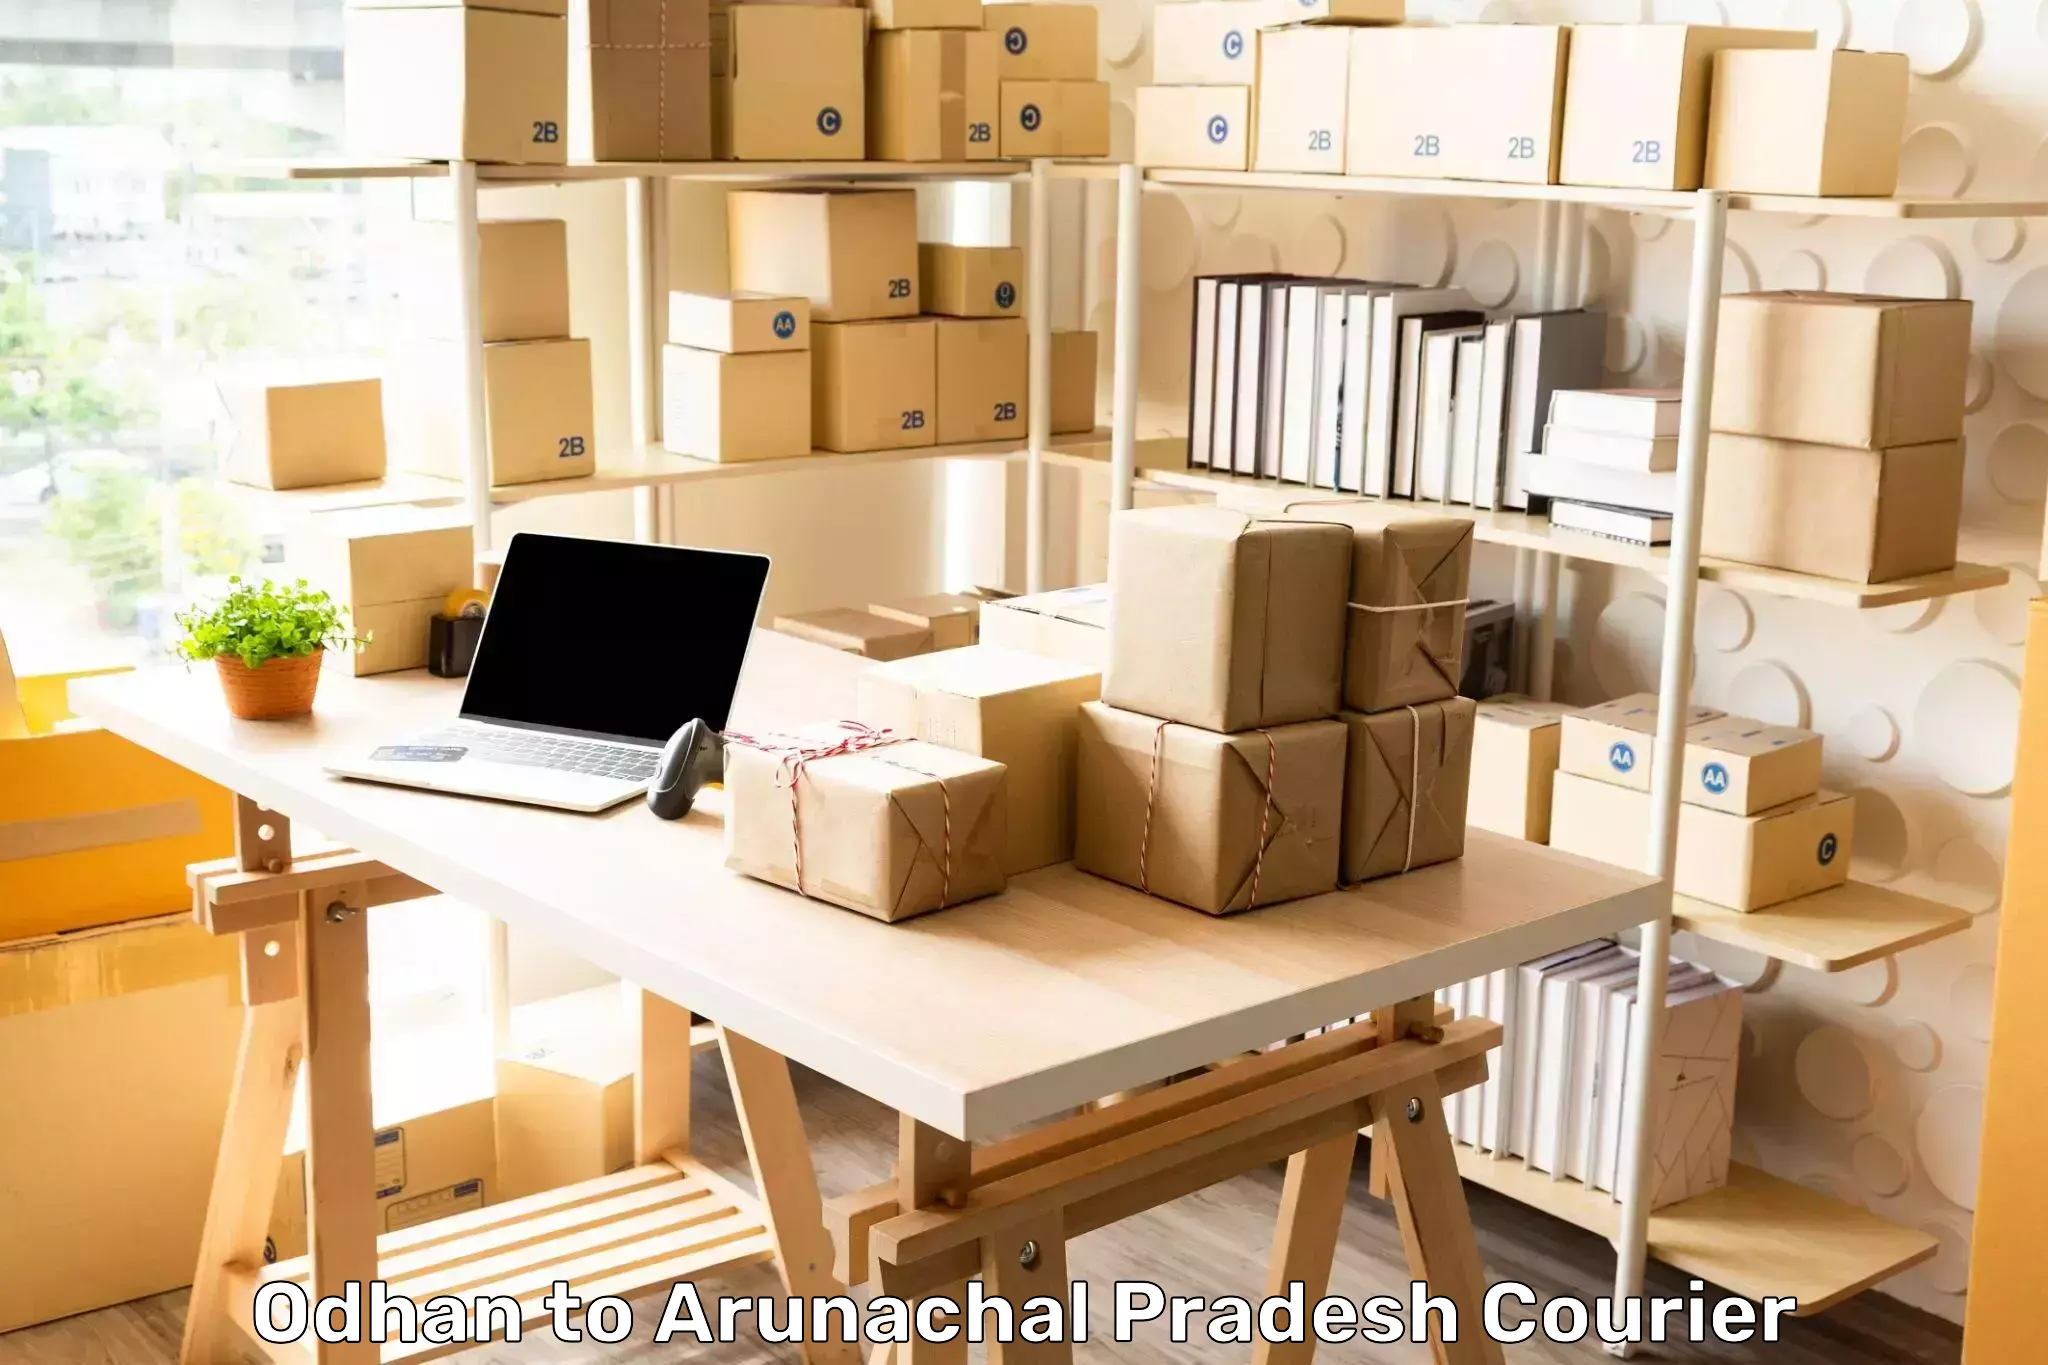 Large-scale shipping solutions Odhan to Arunachal Pradesh